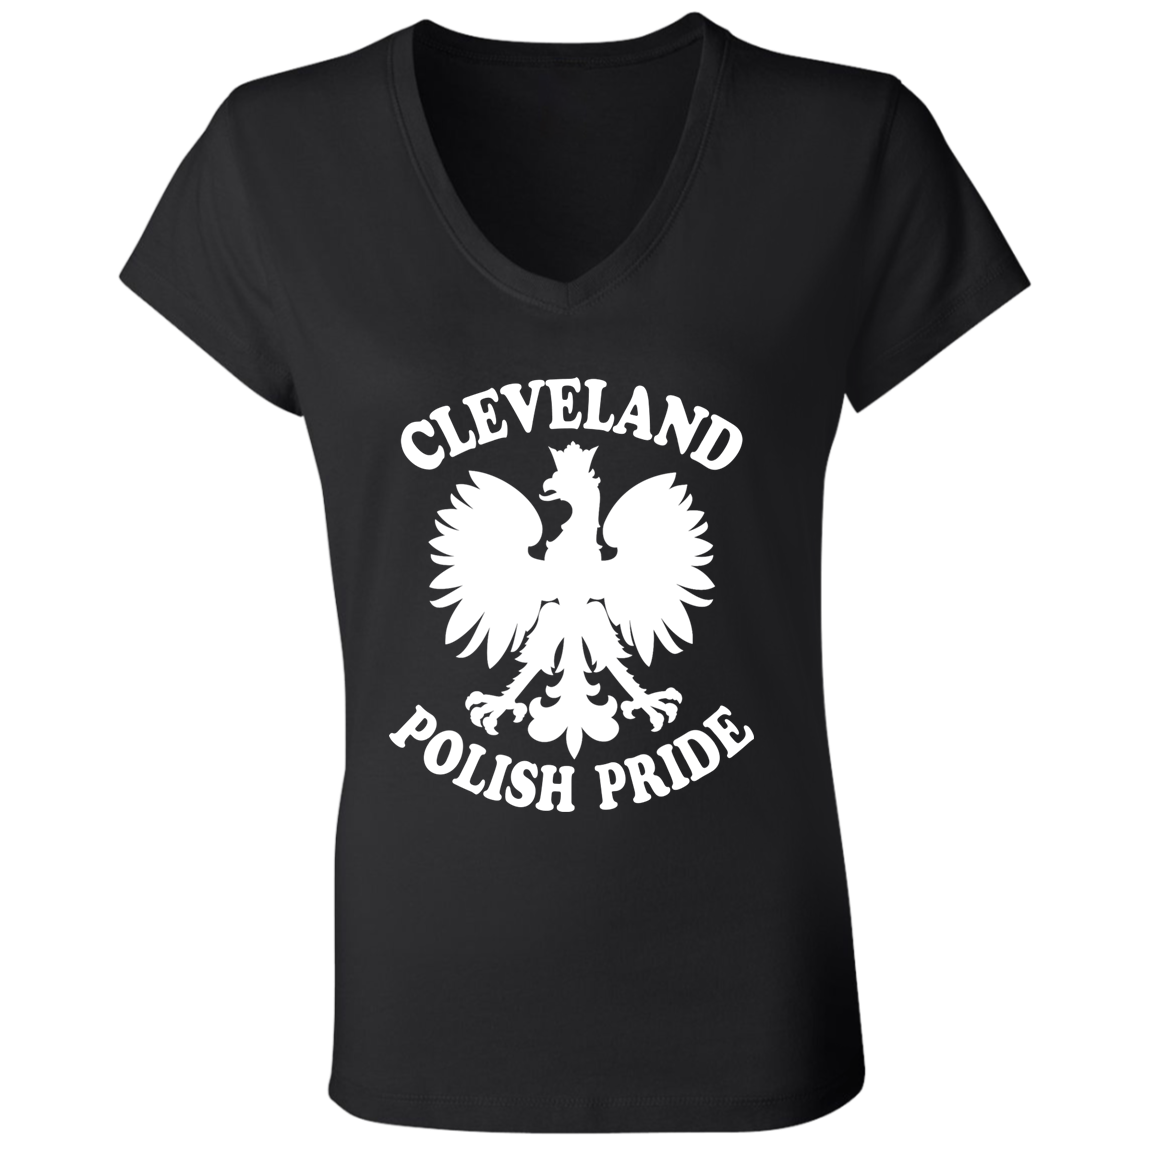 Cleveland Polish Pride Apparel CustomCat B6005 Ladies' Jersey V-Neck T-Shirt Black S